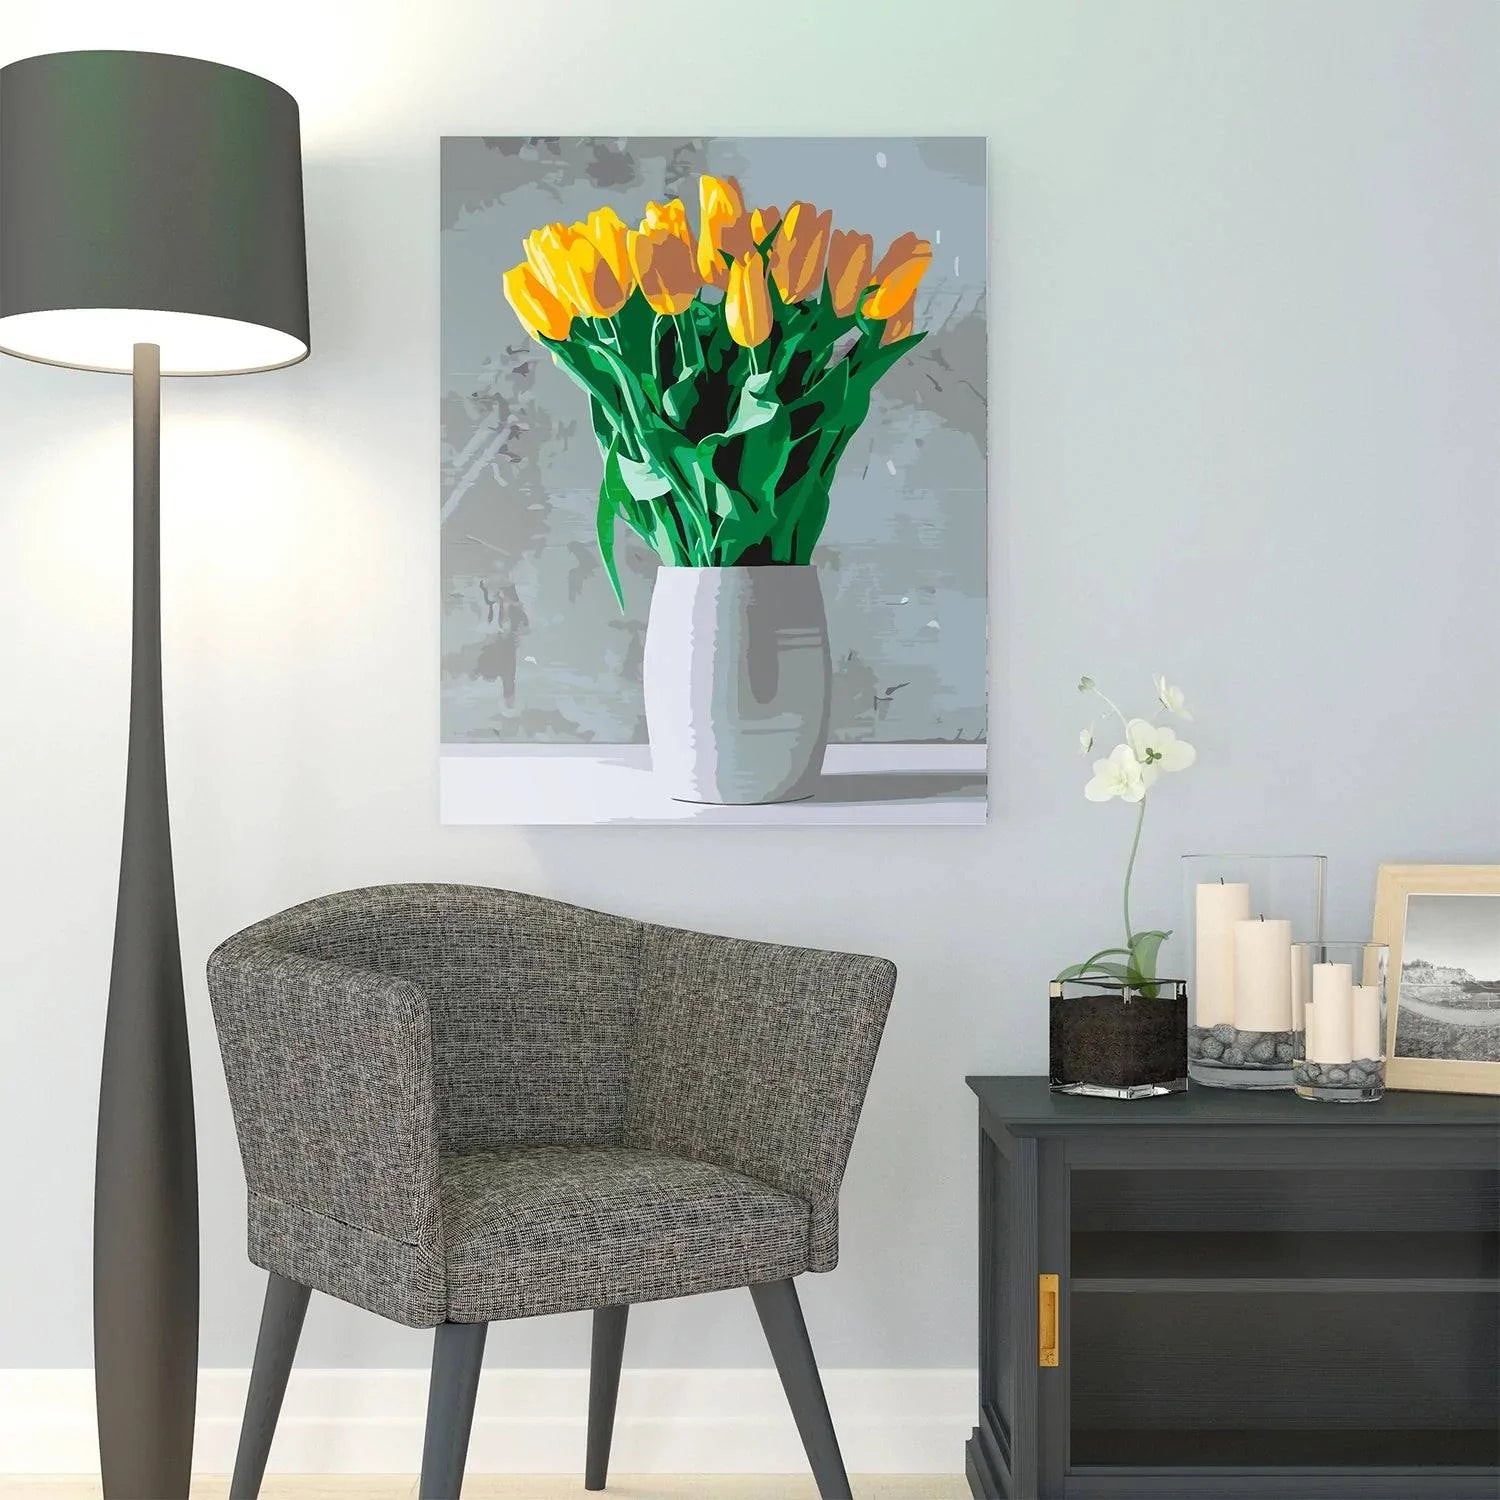 Vase with yellow tulips